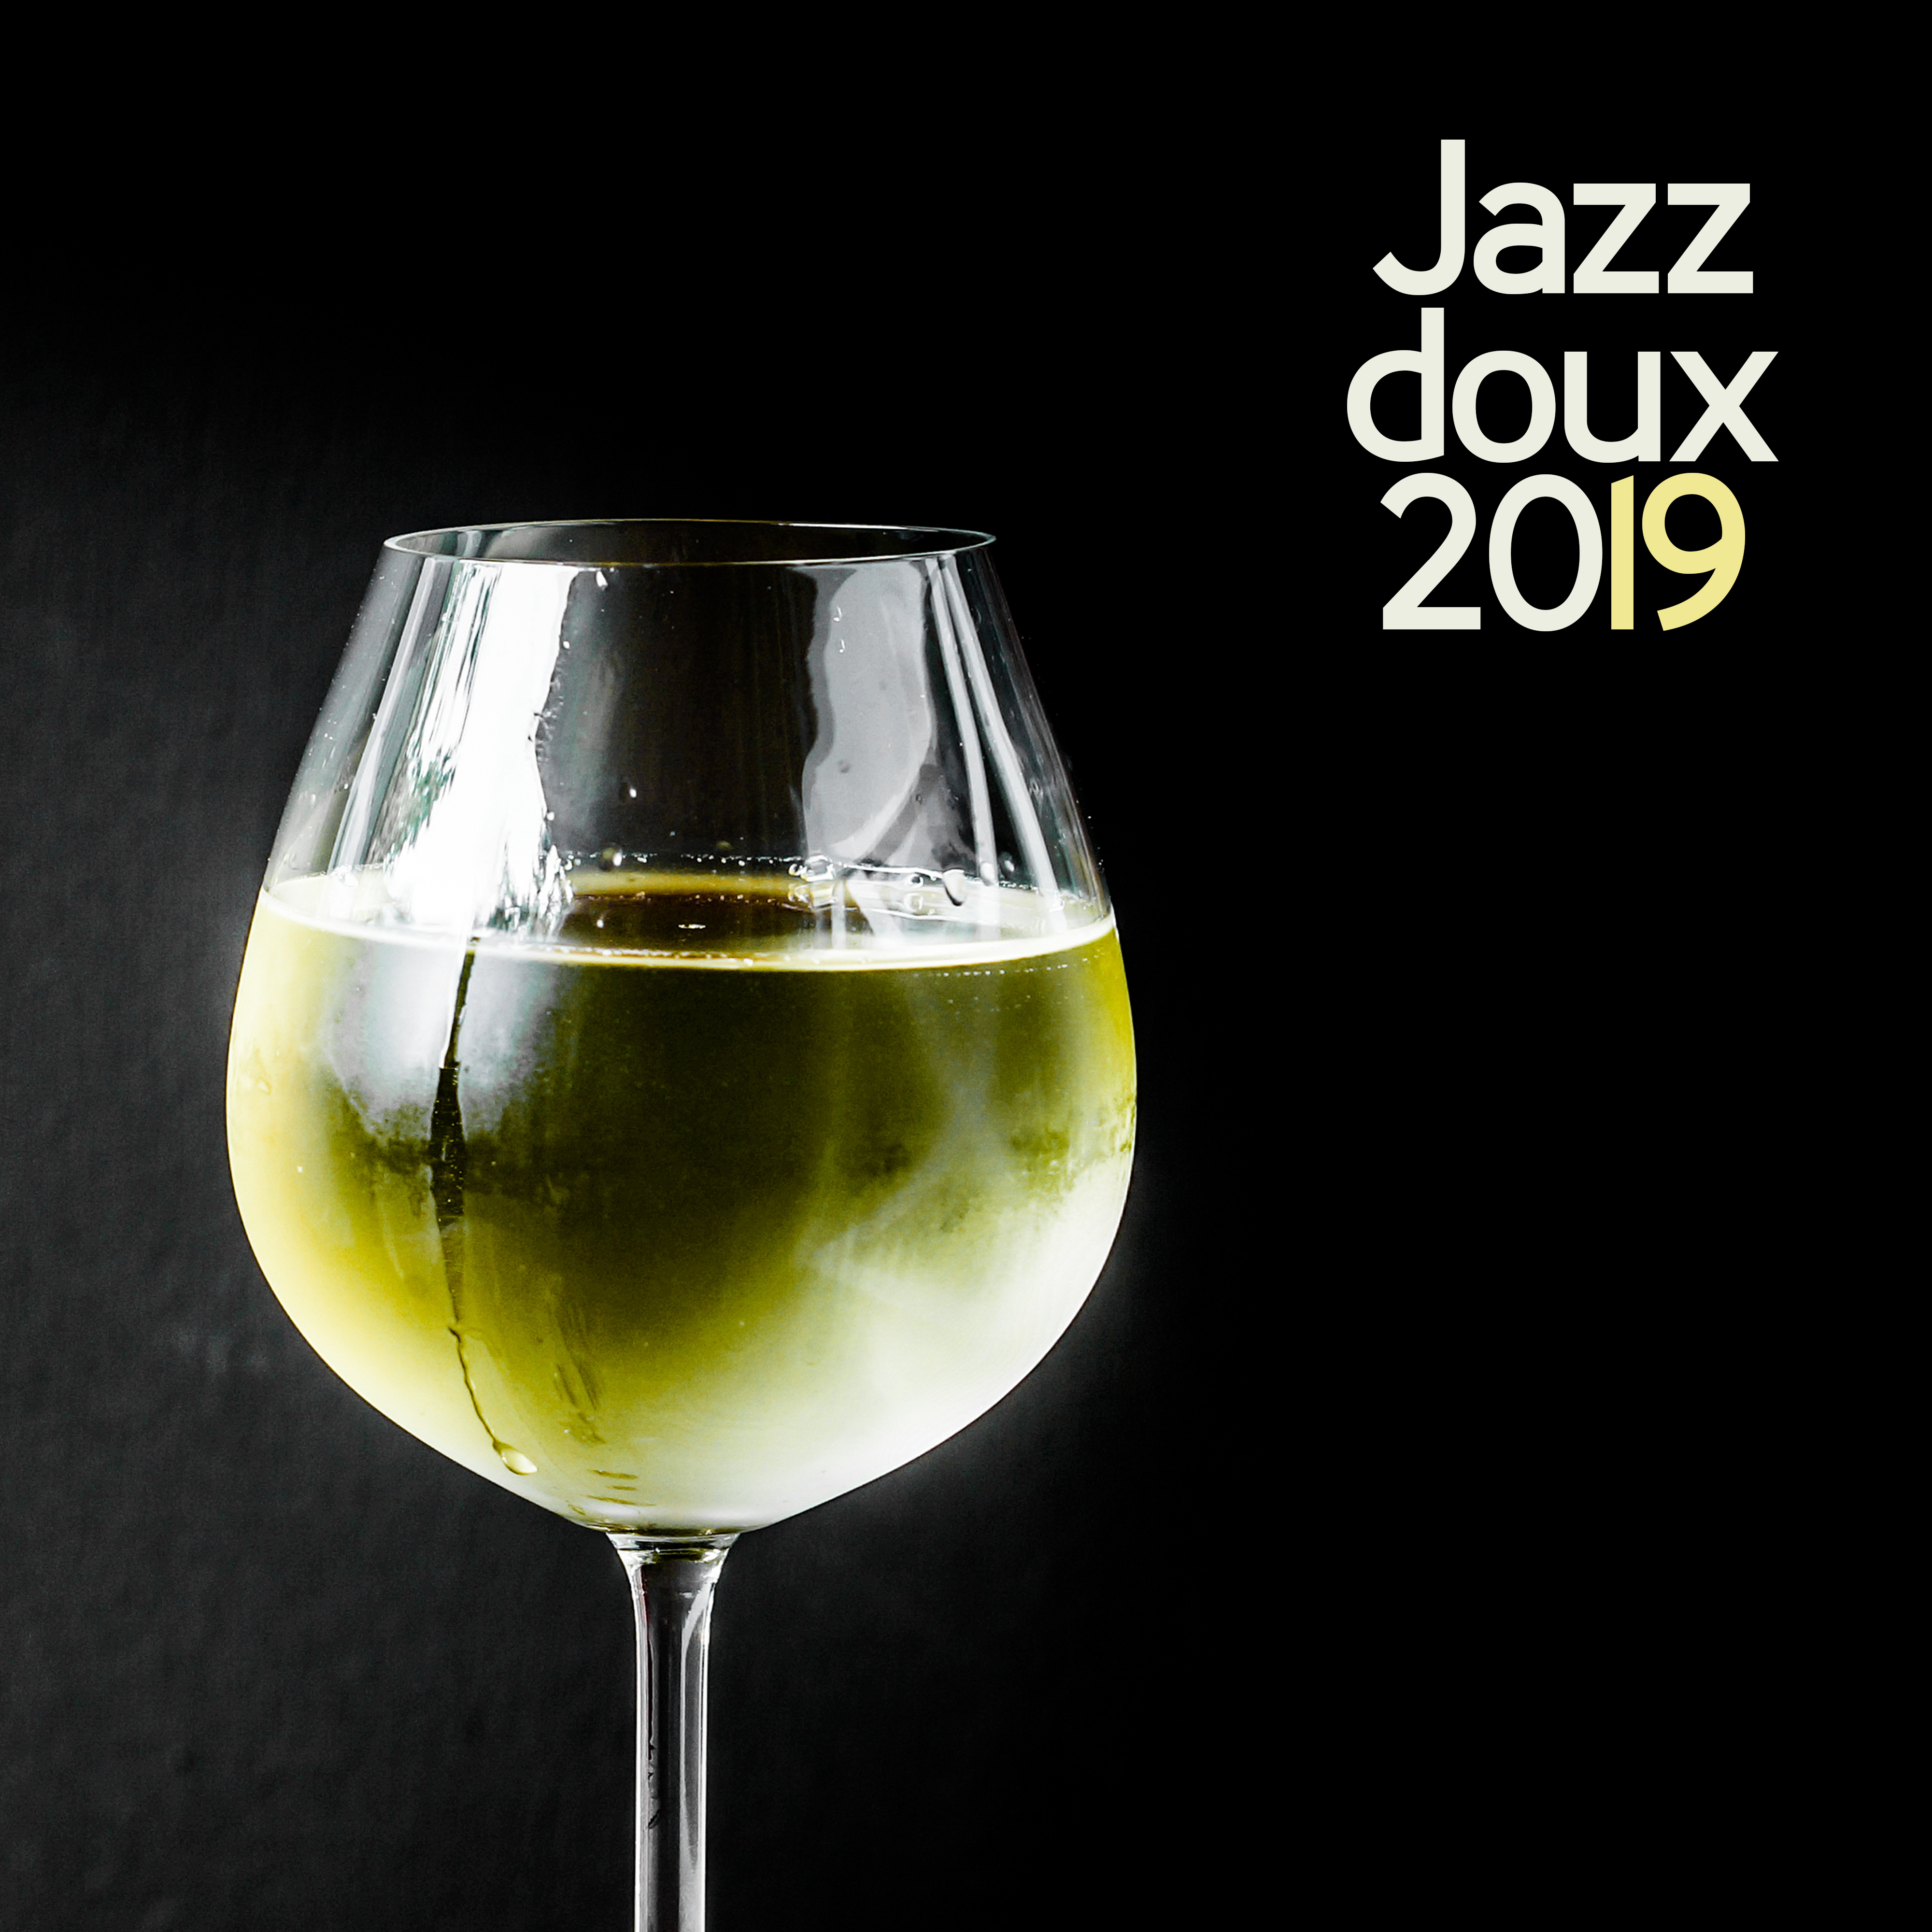 Jazz doux 2019  Musique relaxante